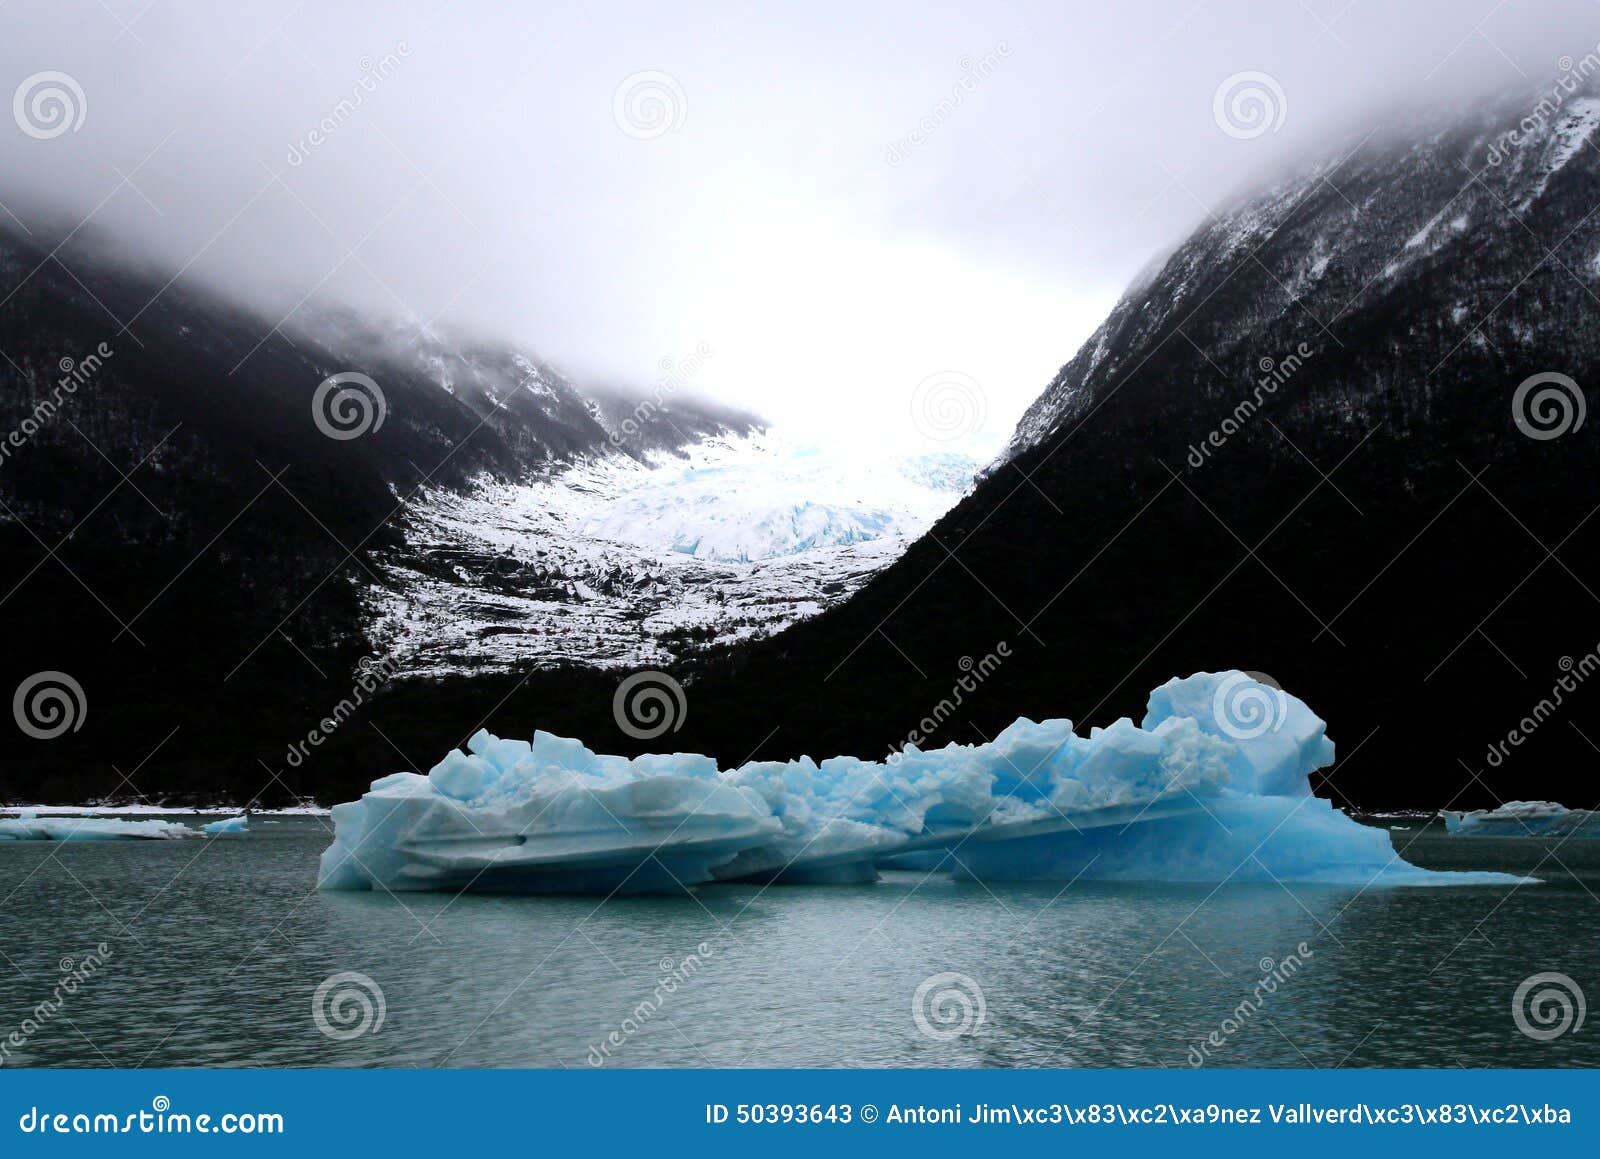 small iceberg in los glaciares national park, argentina